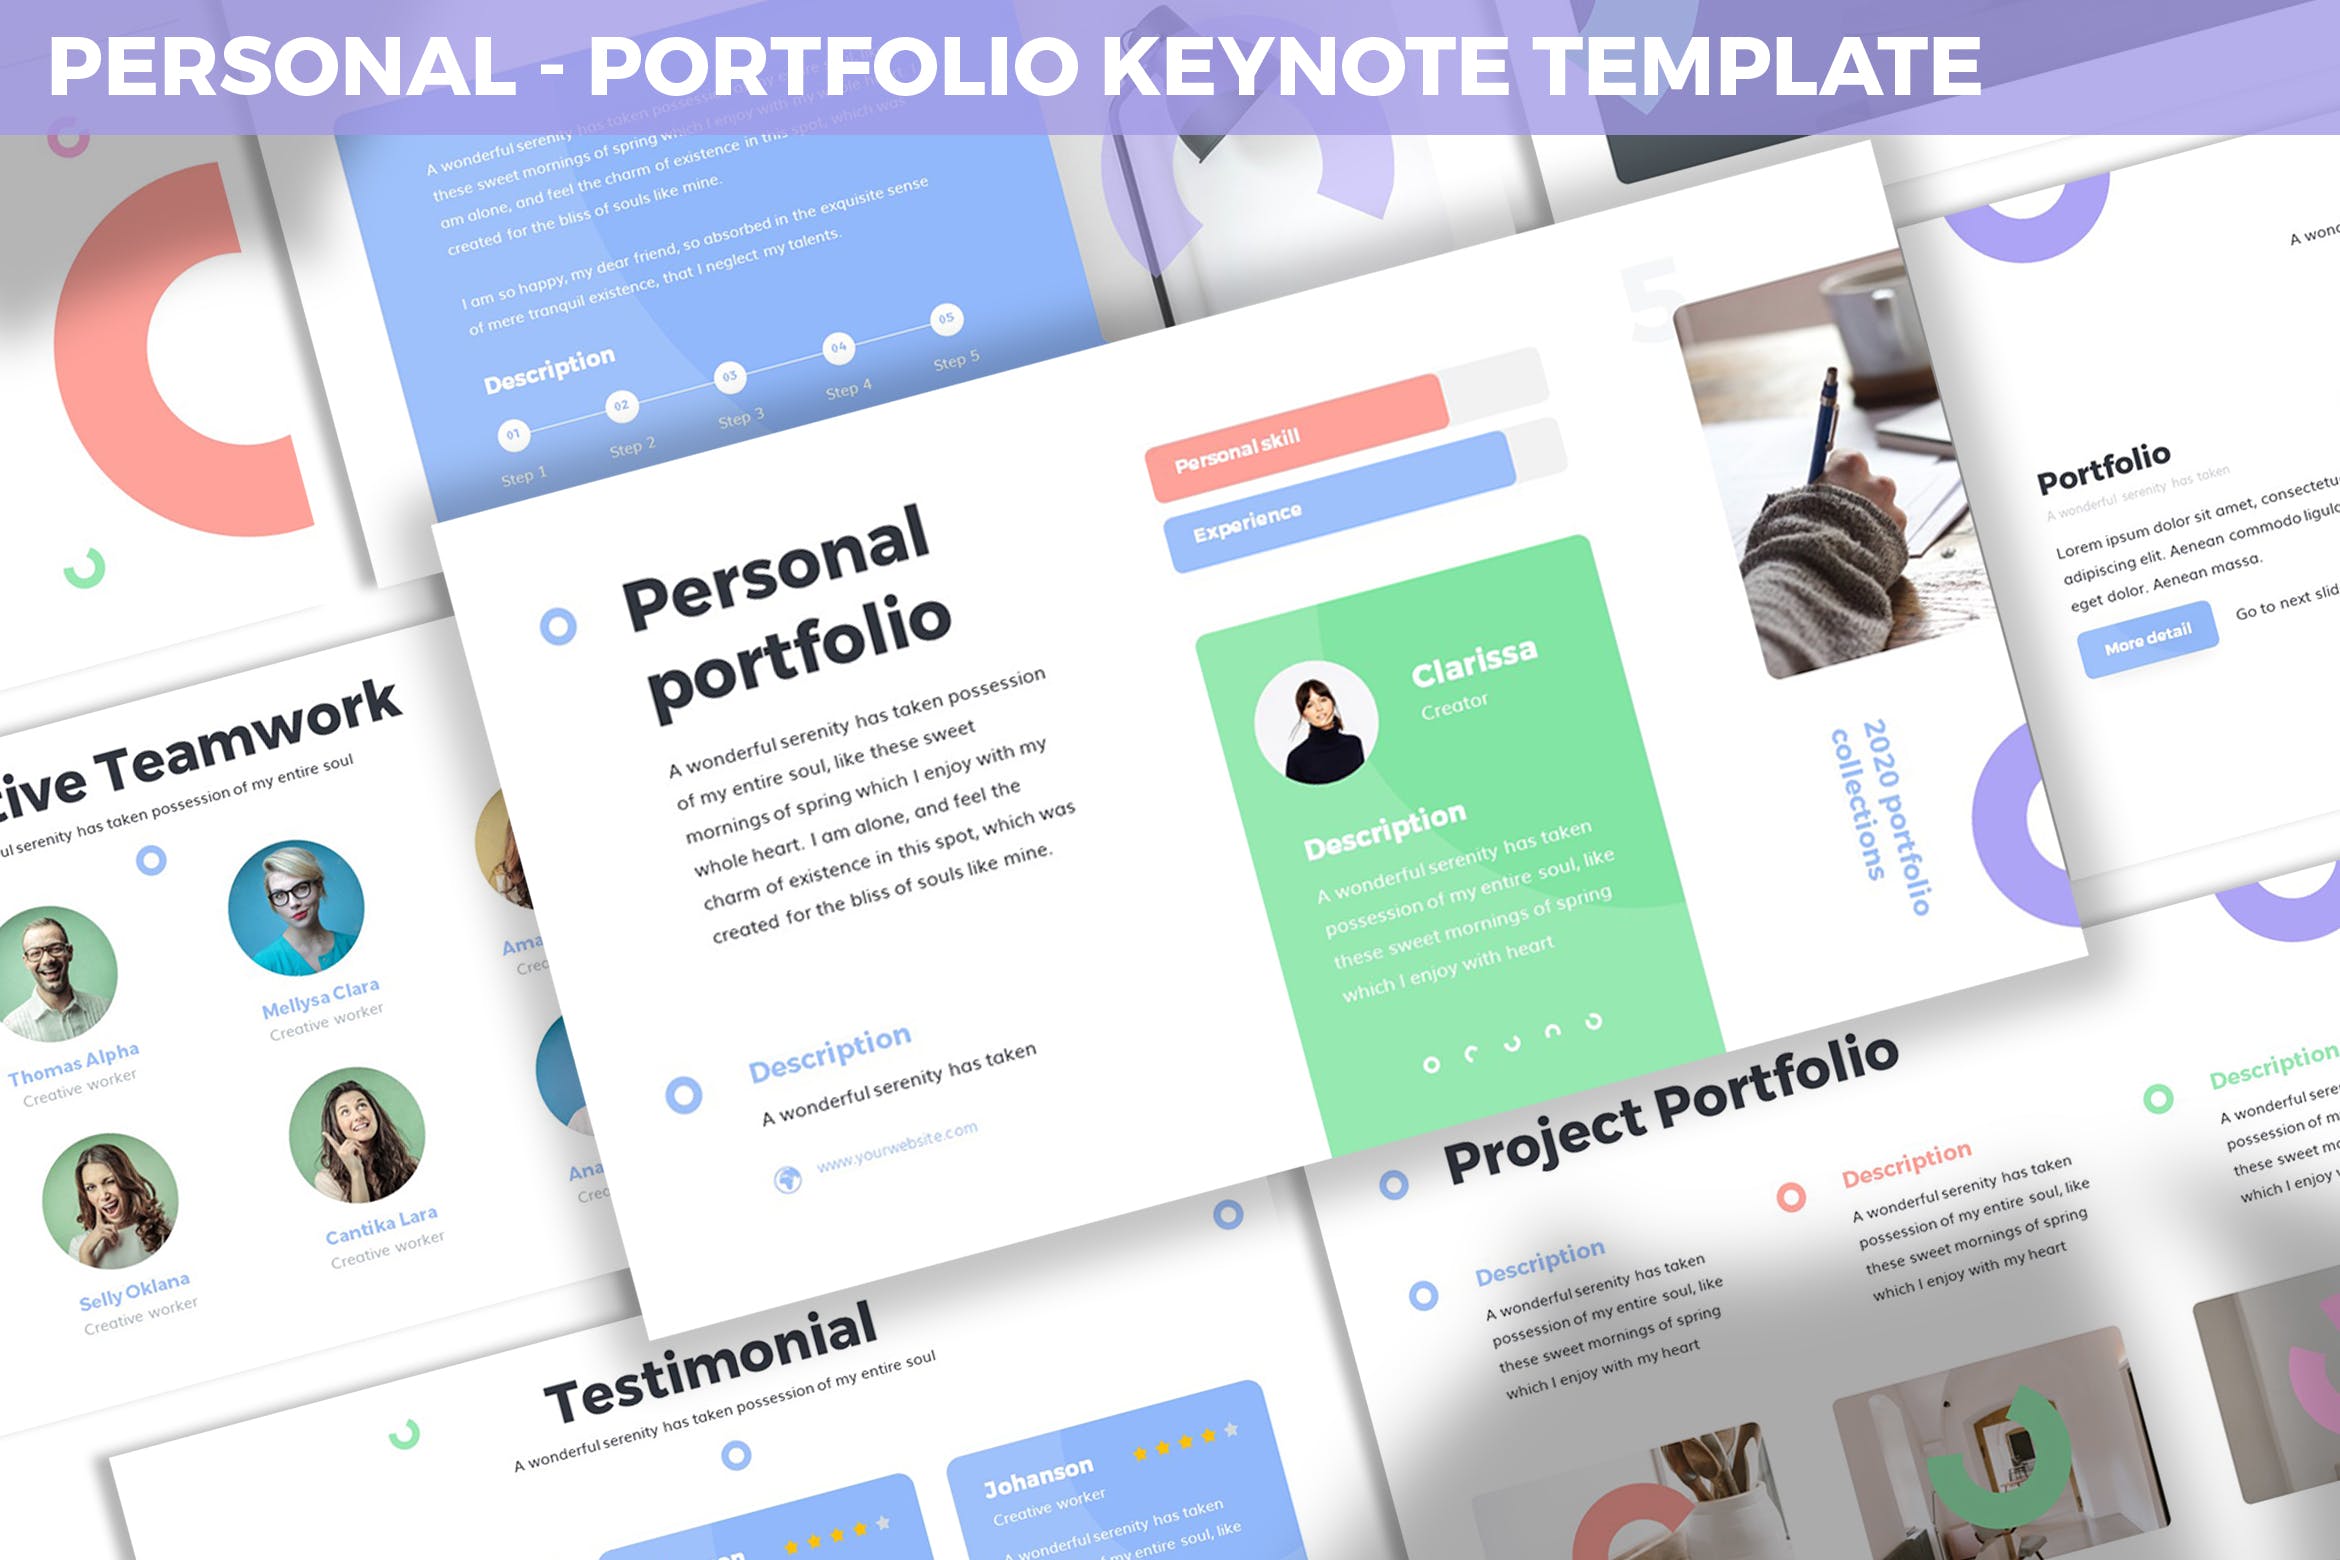 项目融资方案报告16设计素材网精选Keynote模板模板 Personal – Portfolio Keynote Template插图